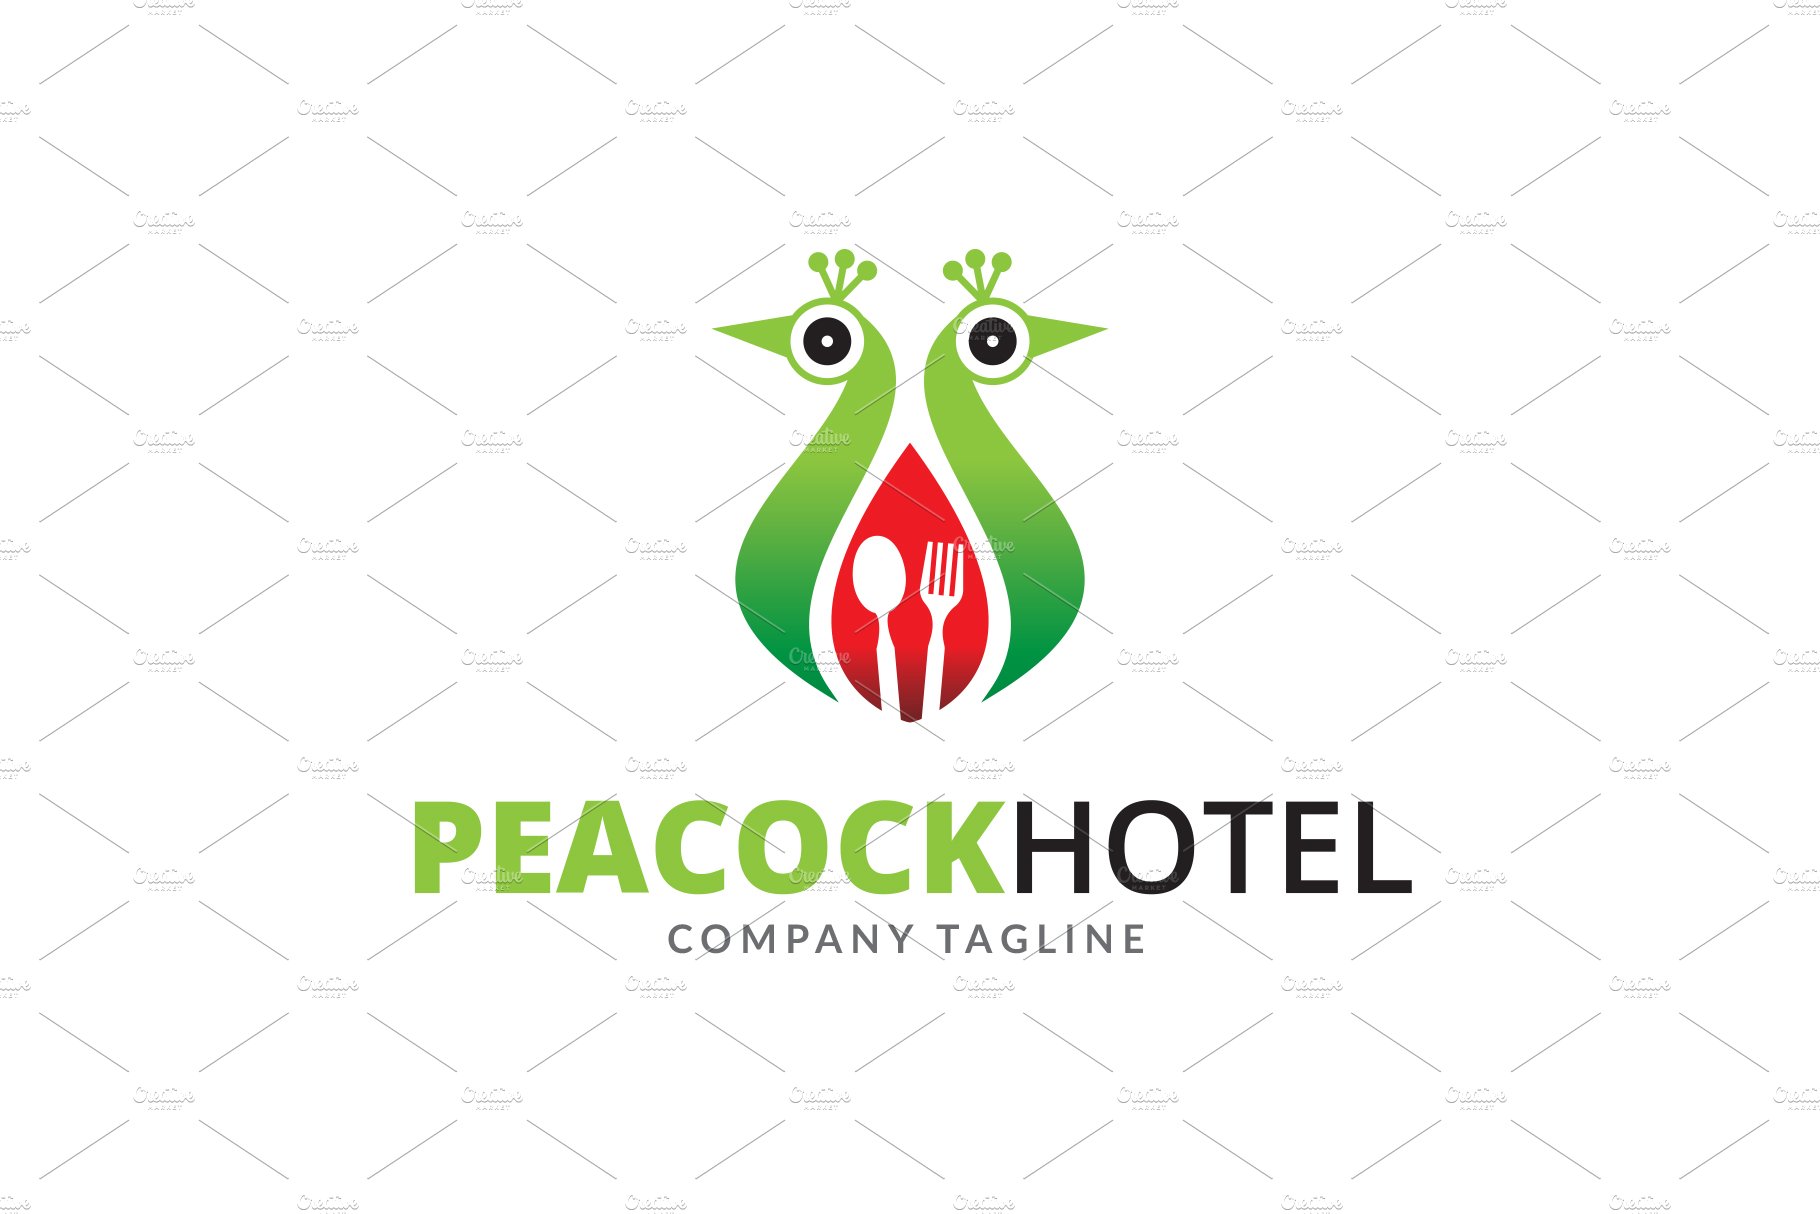 Peacock Hotel Logo cover image.